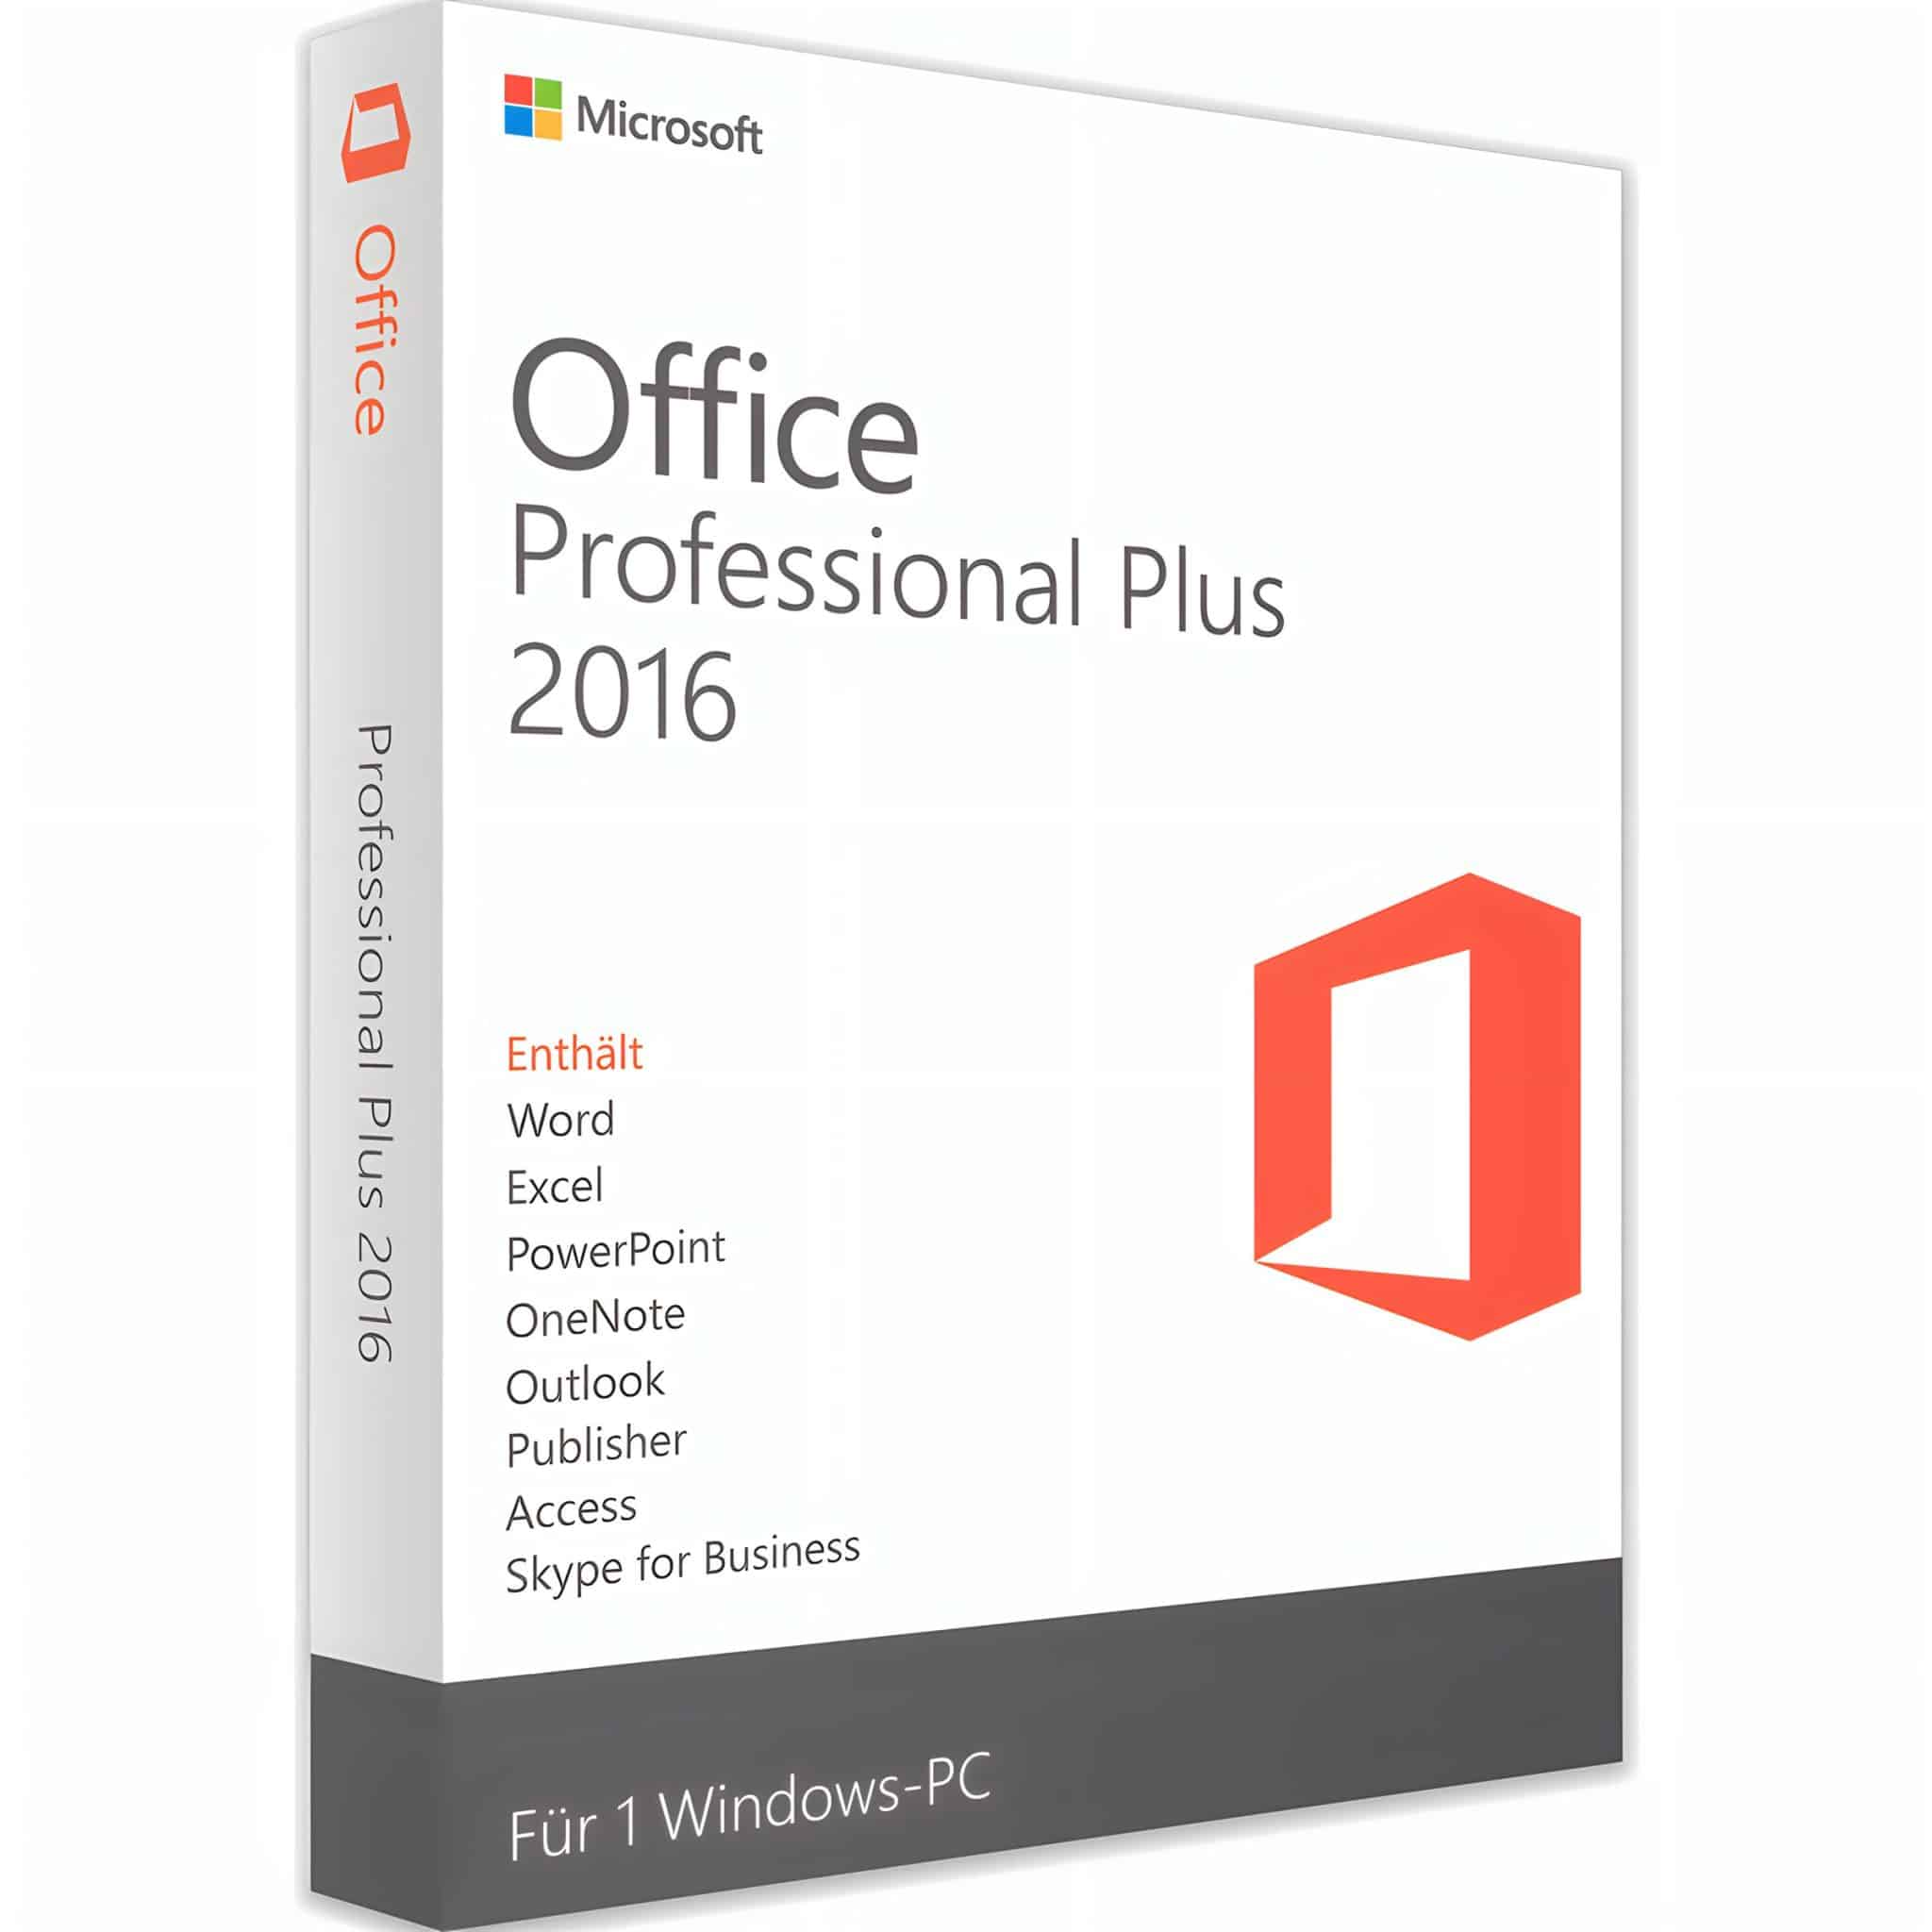 Microsoft Office 2016 Professional Plus 1user Product Key